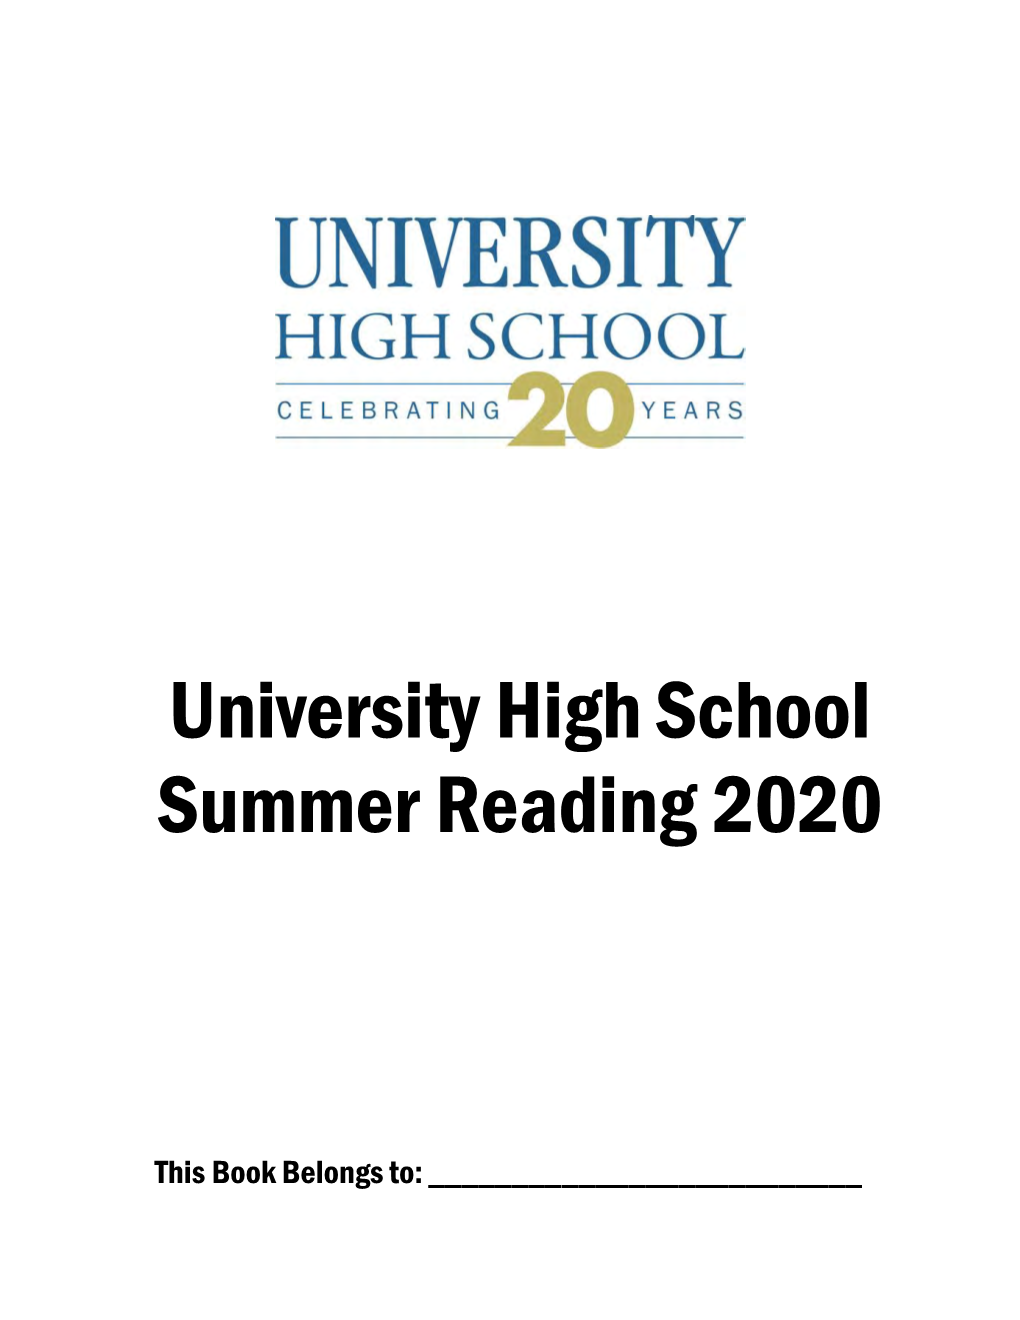 University High School Summer Reading 2020